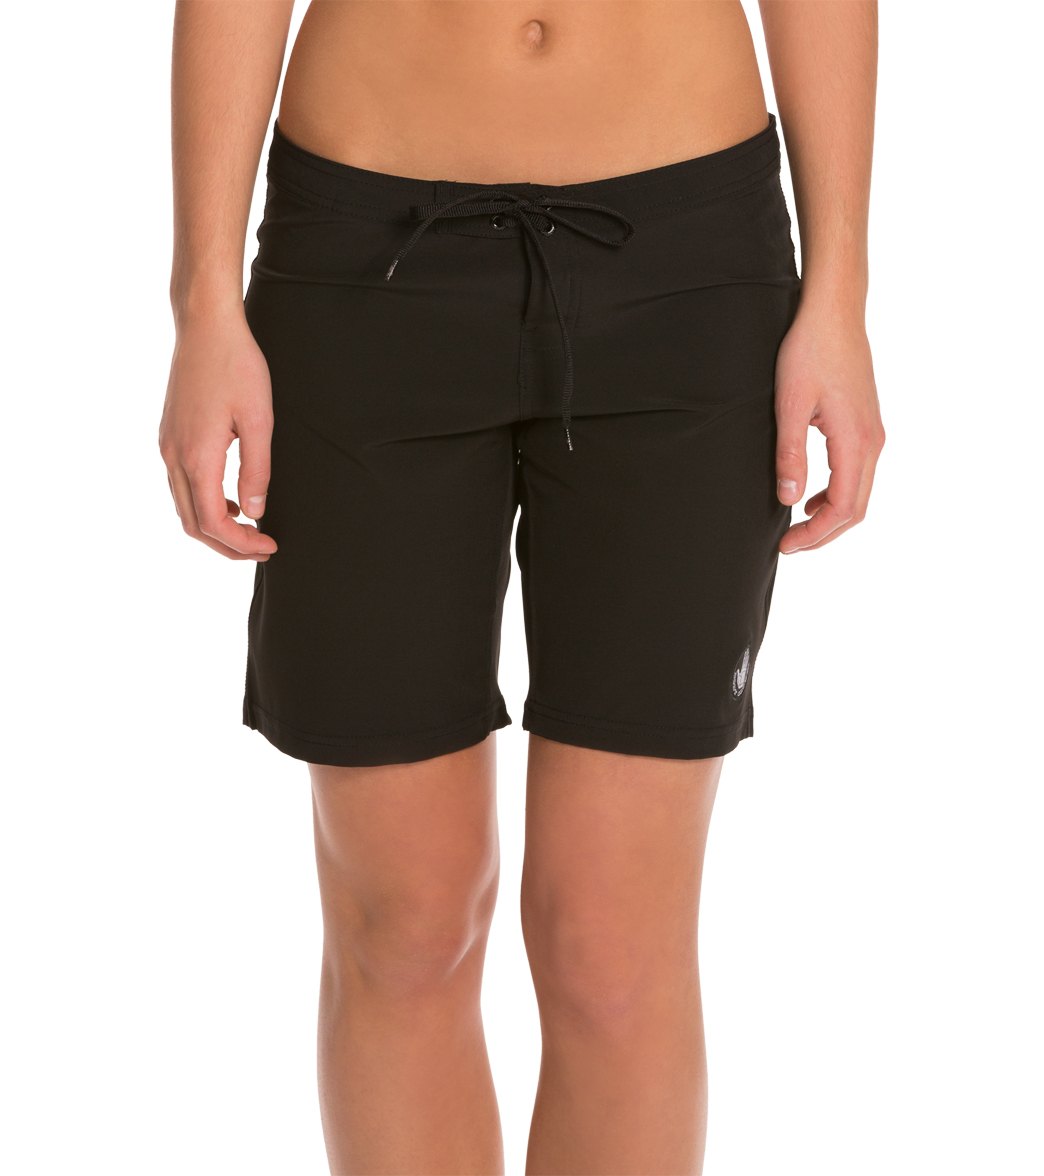 Body Glove Women's Harbor 8 Stretch Boardshorts - Black X-Small Polyester/Spandex - Swimoutlet.com